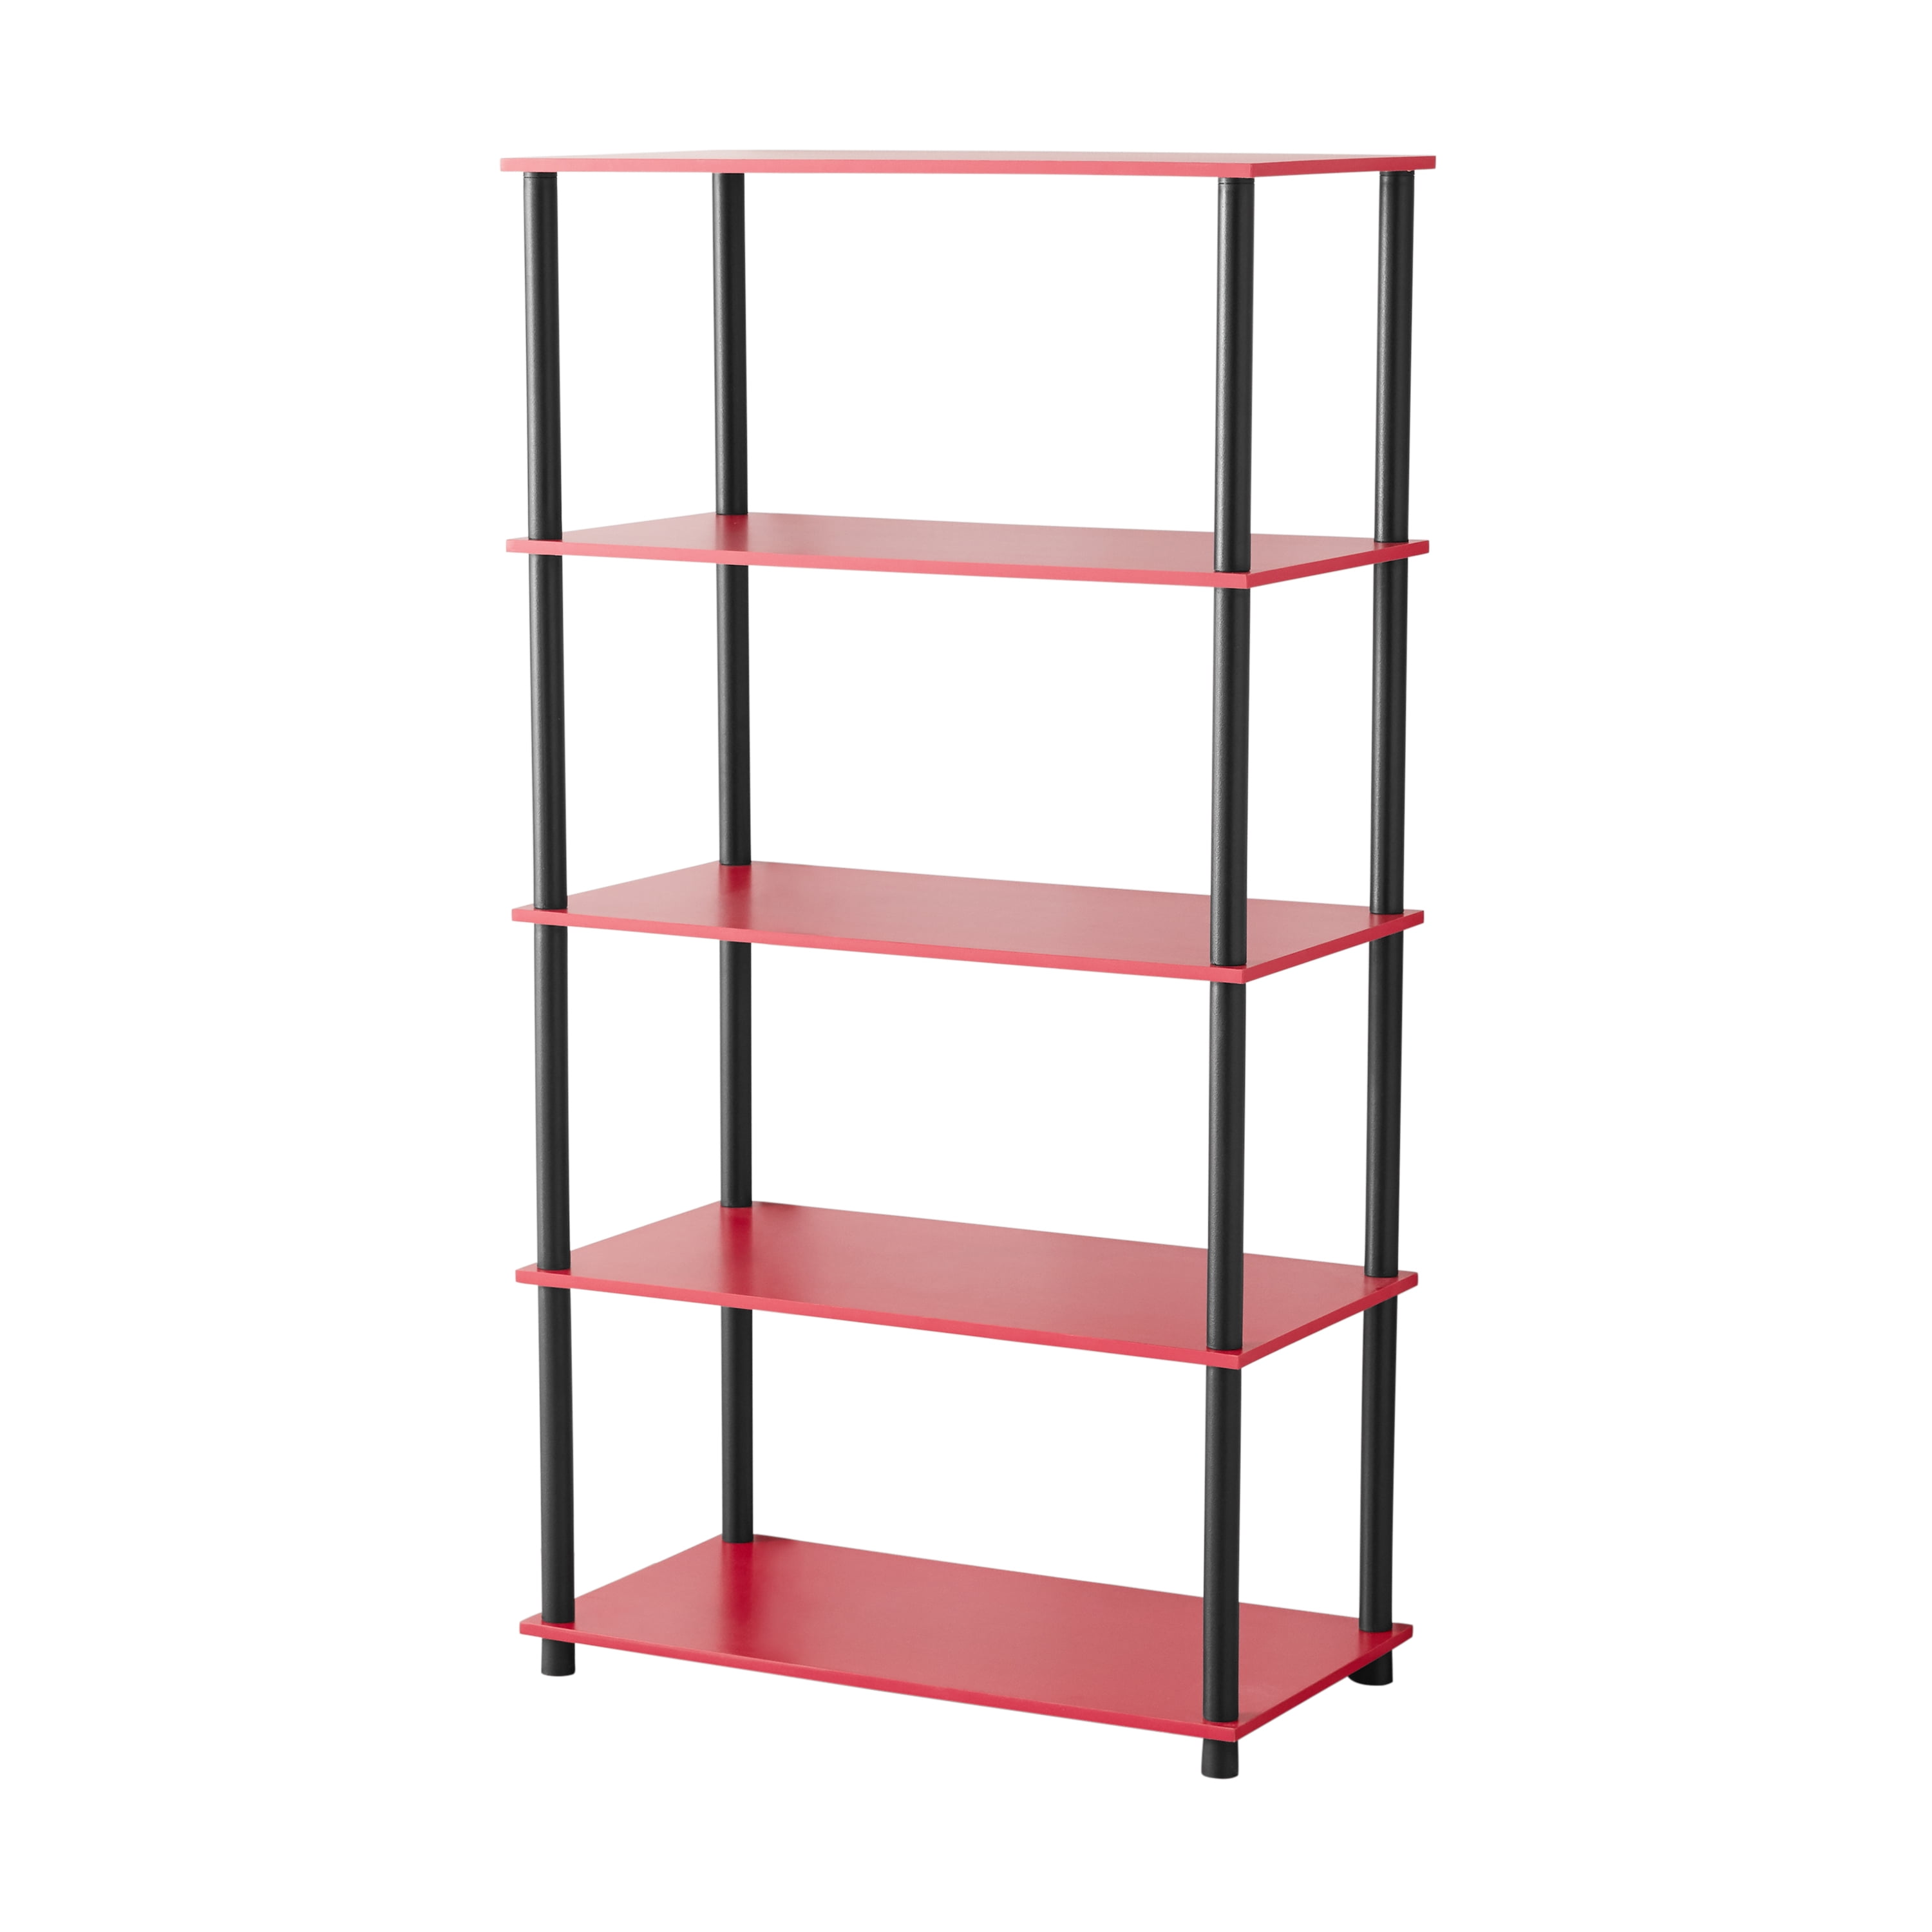 5 Shelf Standard Storage Bookshelf Red, Mainstays 5 Shelf Bookcase Instructions